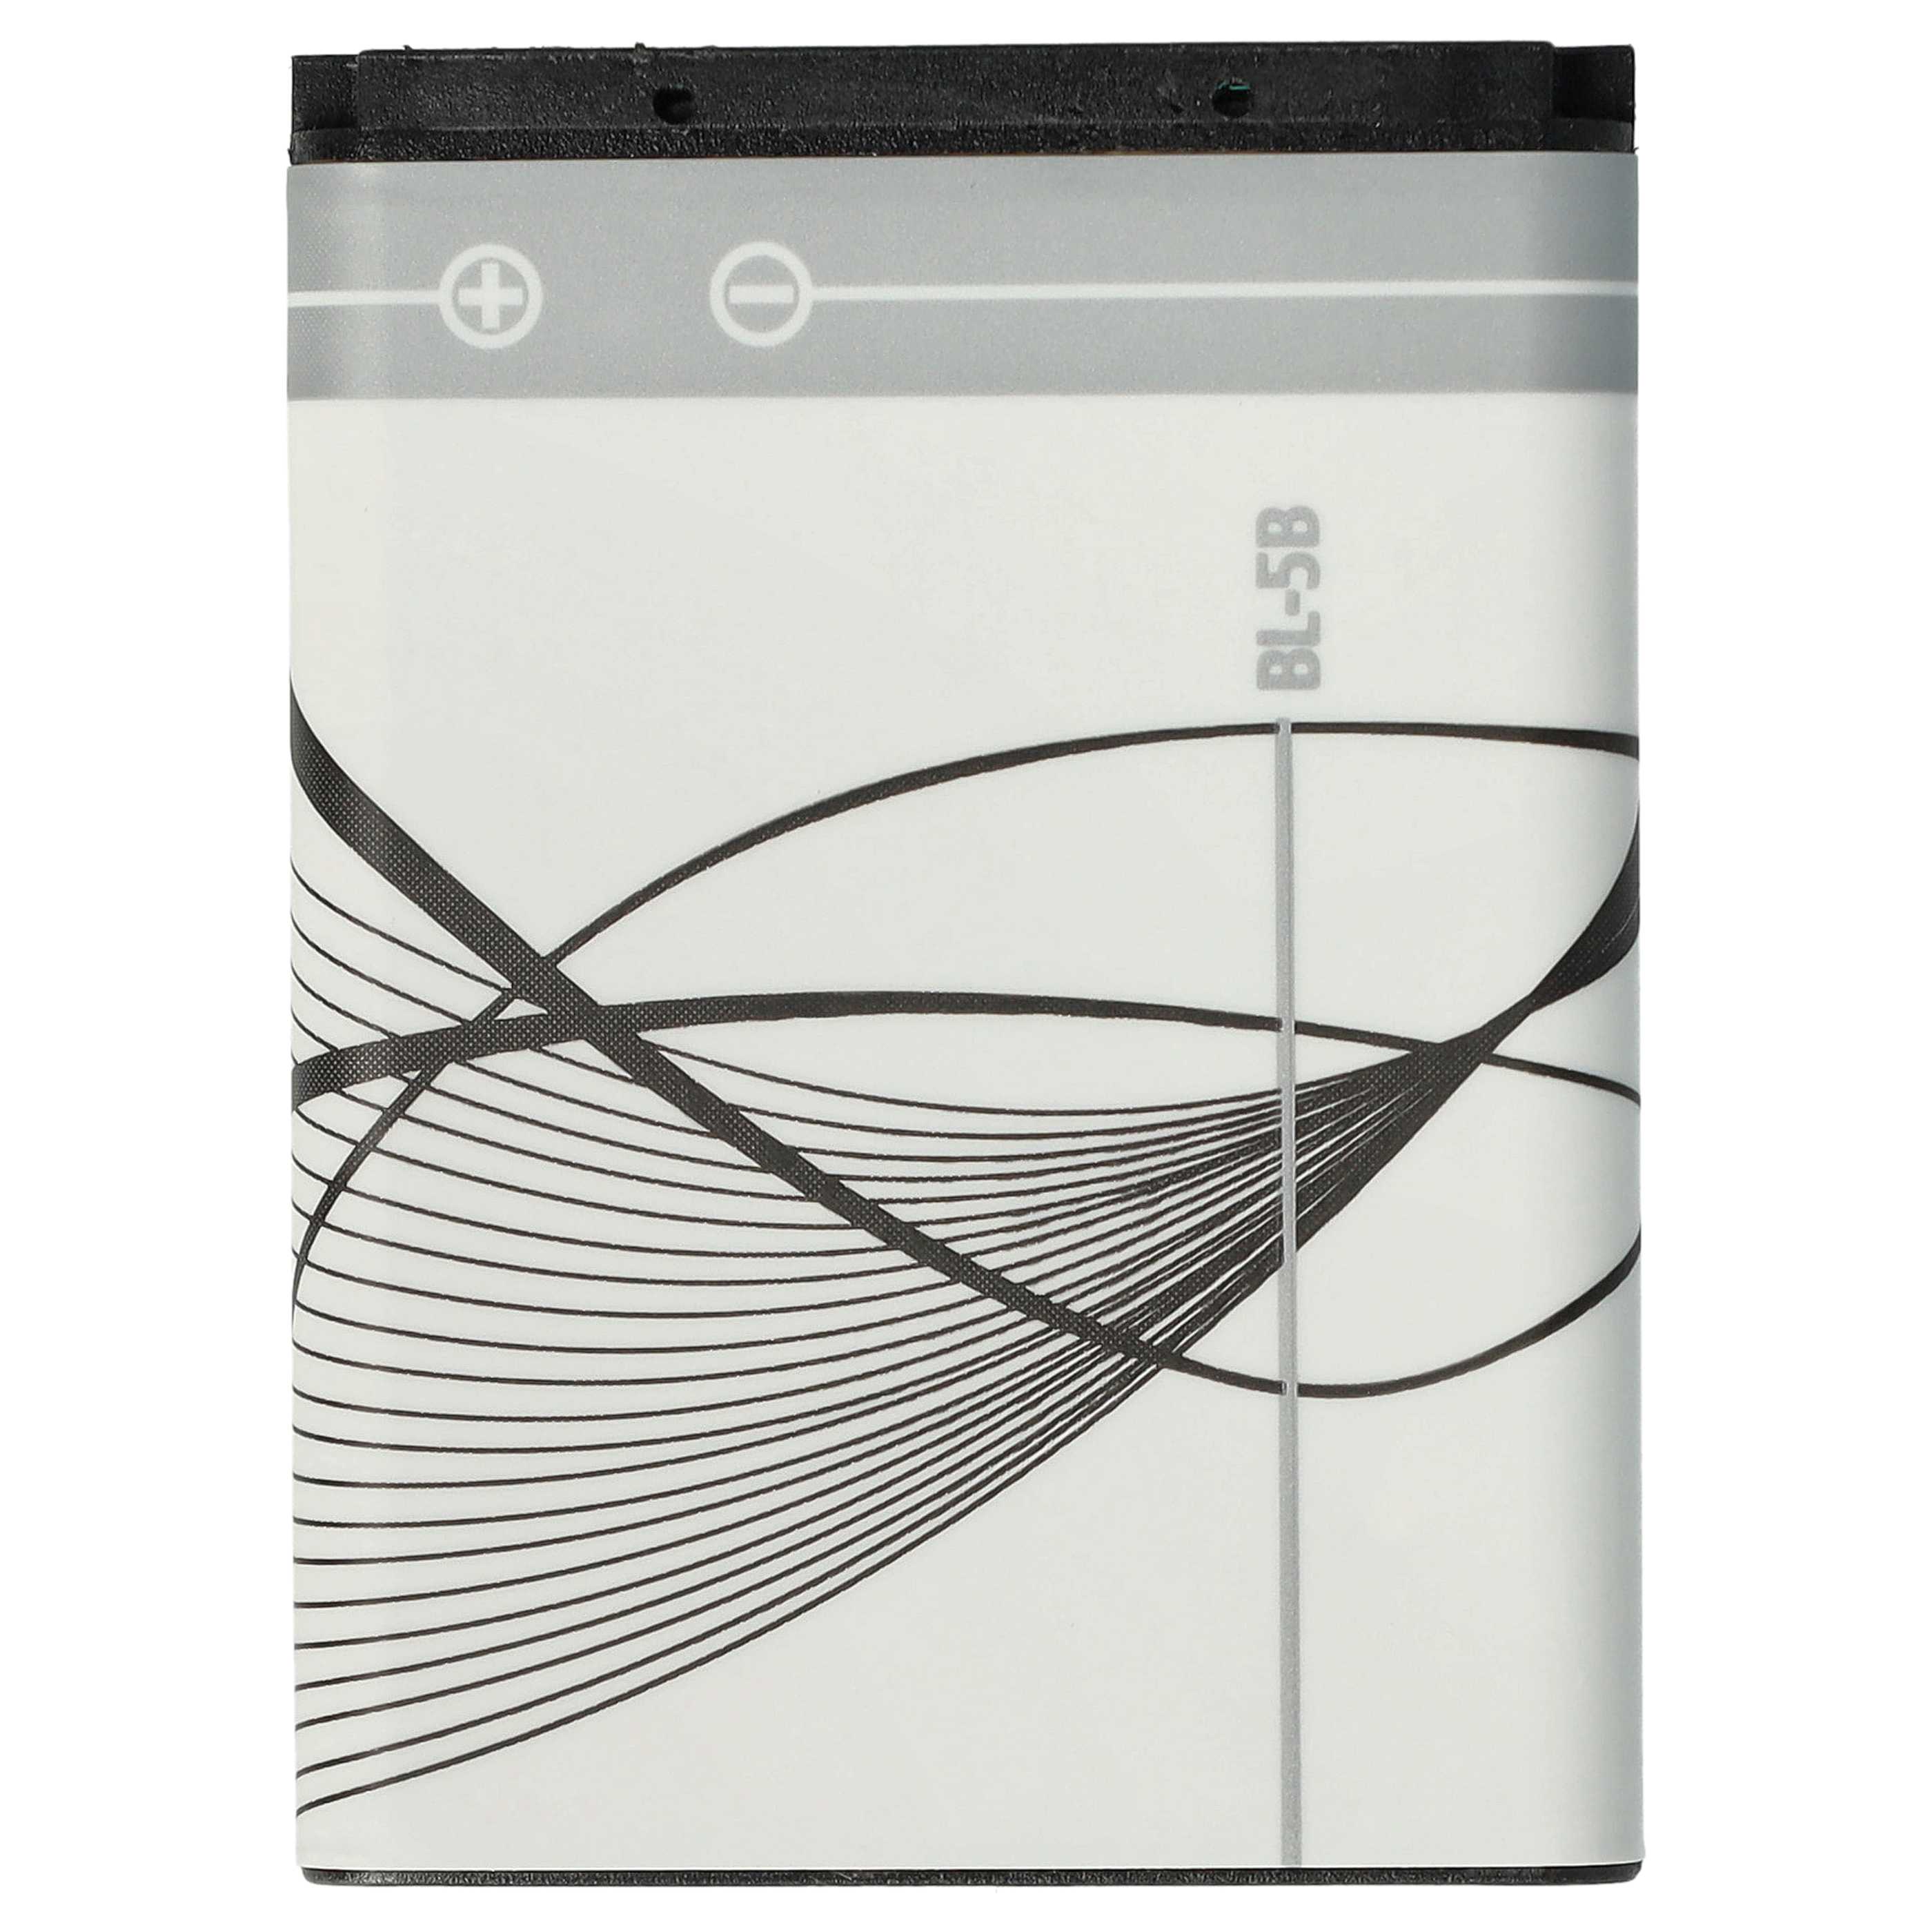 Mobile Phone Battery Replacement for Blu N5B80T - 600mAh 3.7V Li-Ion